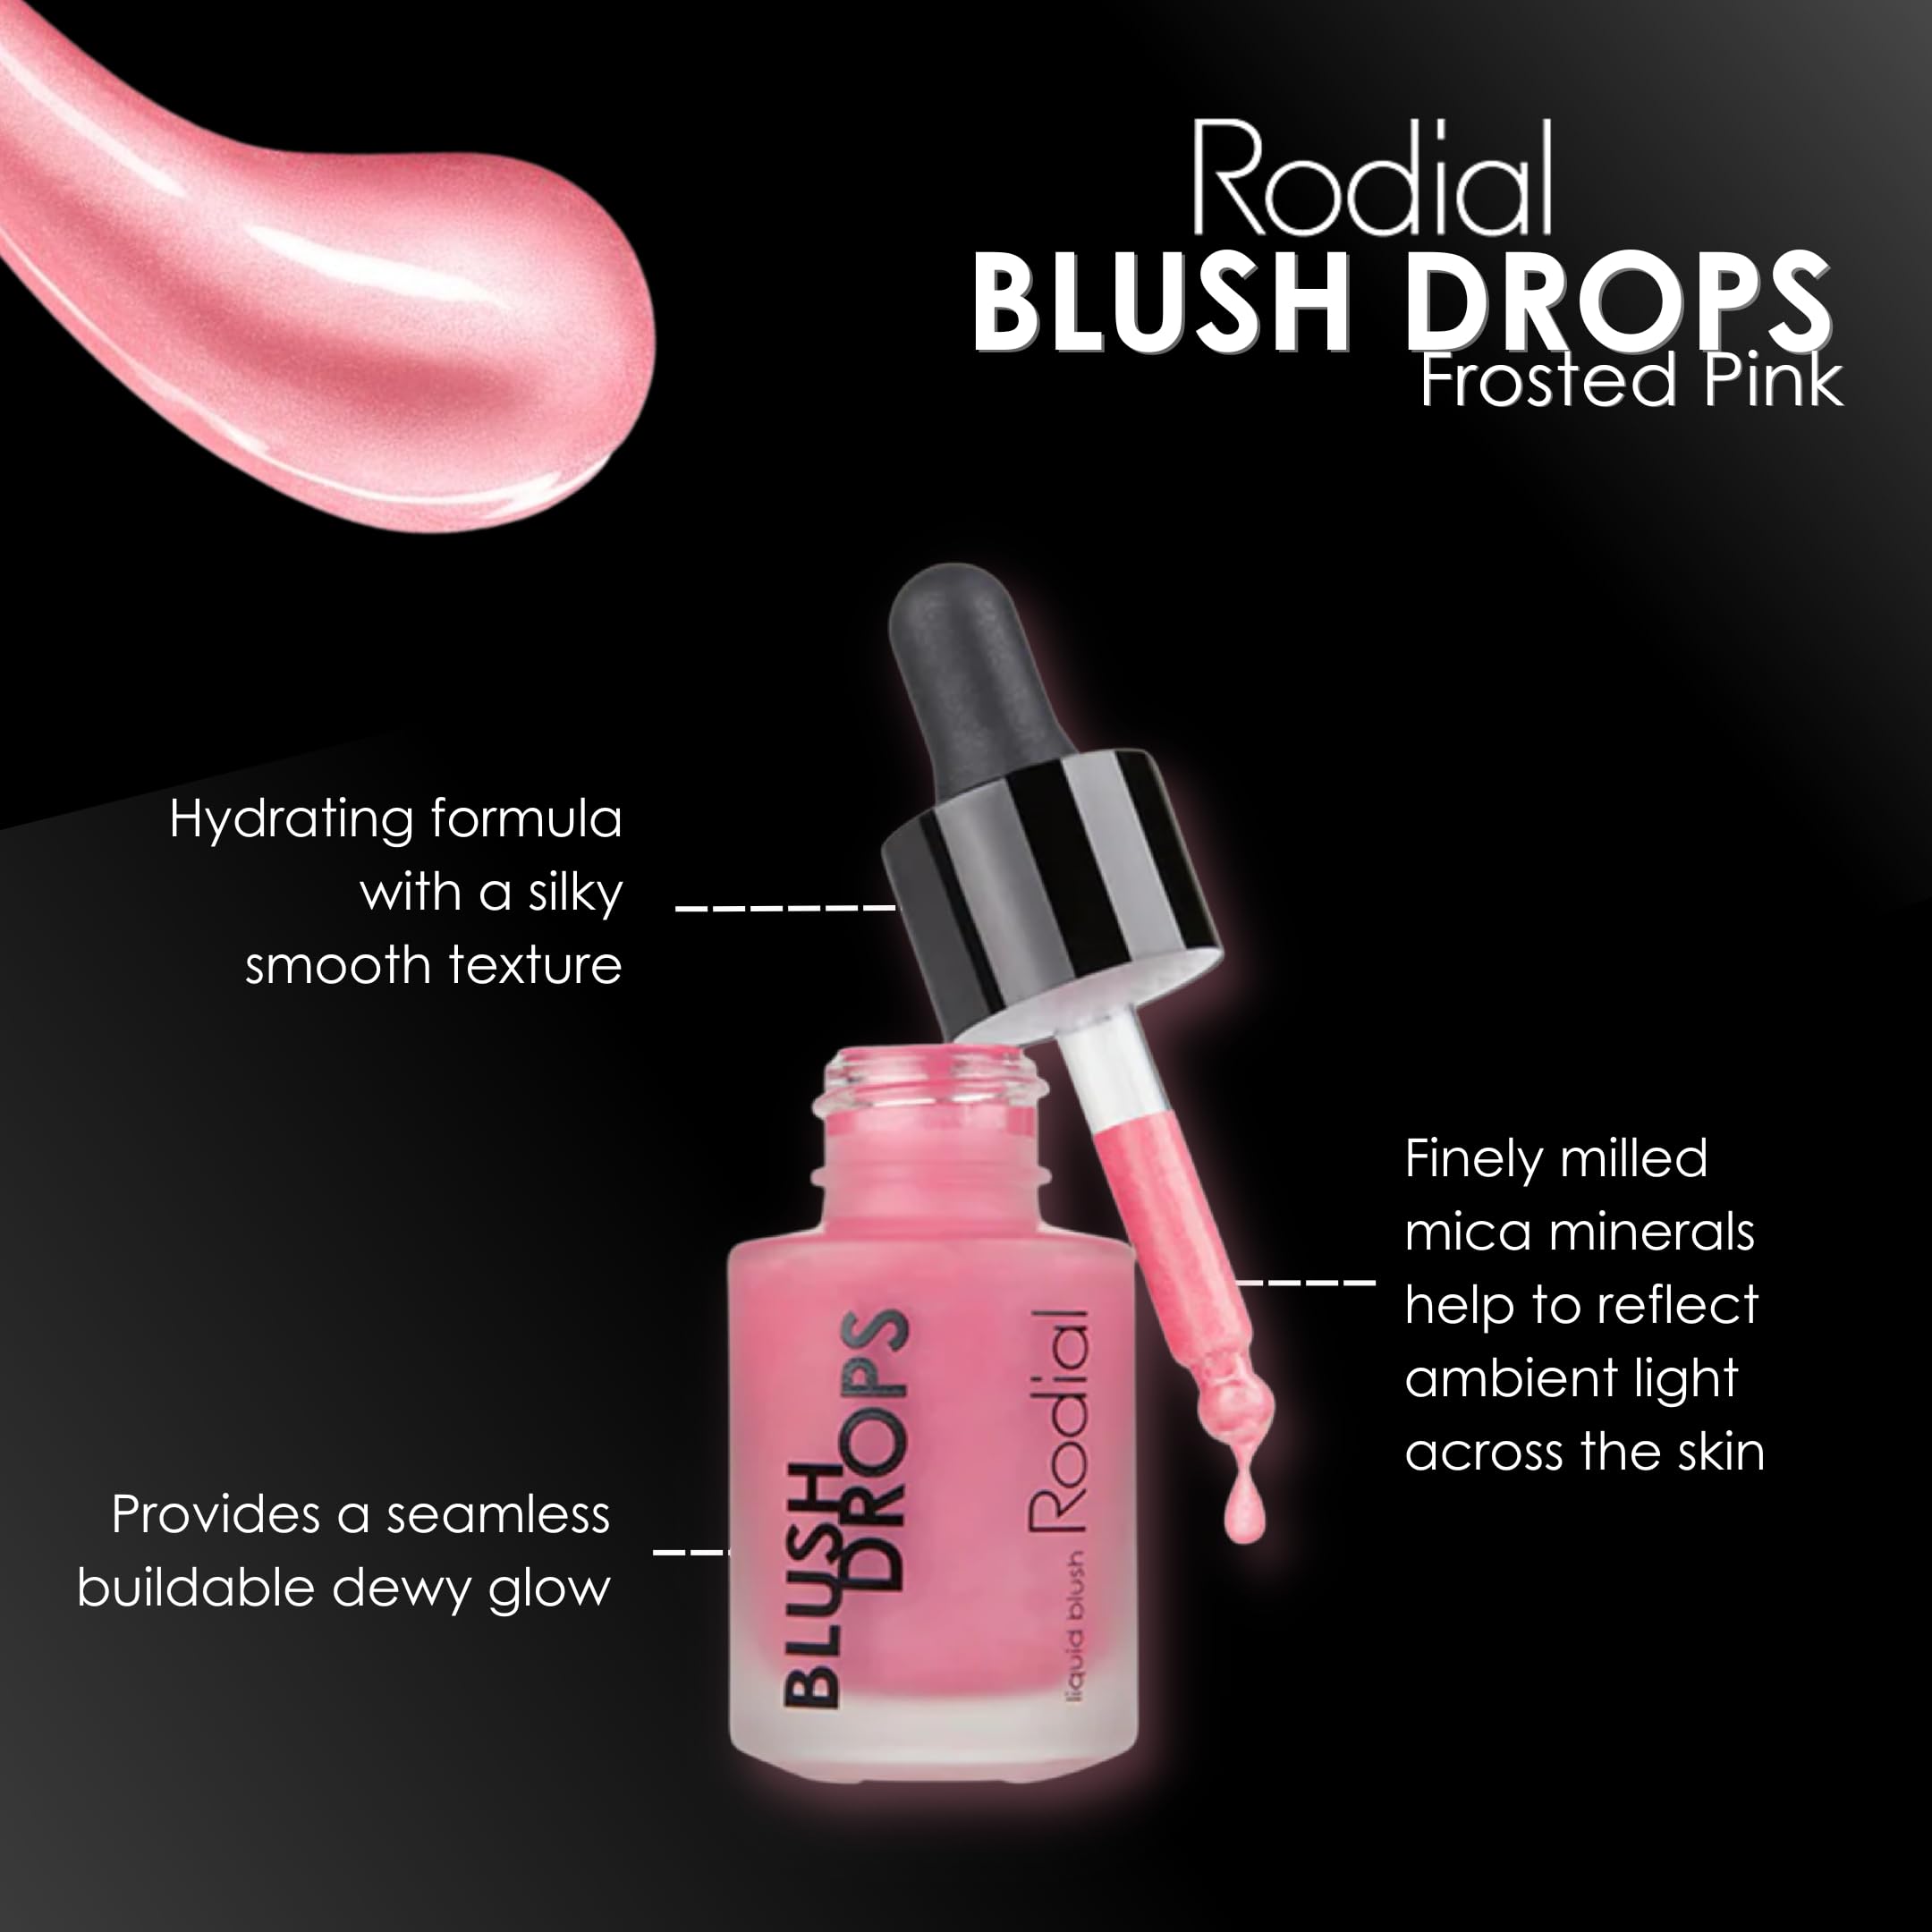 Rodial Blush Drops Sunset Kiss/Frosted Pink, 0.5 fl oz, Moisturising Make Up Blush Drops with Vitamin E, Liquid Blush with Naturally Radiant Finish, Long Lasting Finish